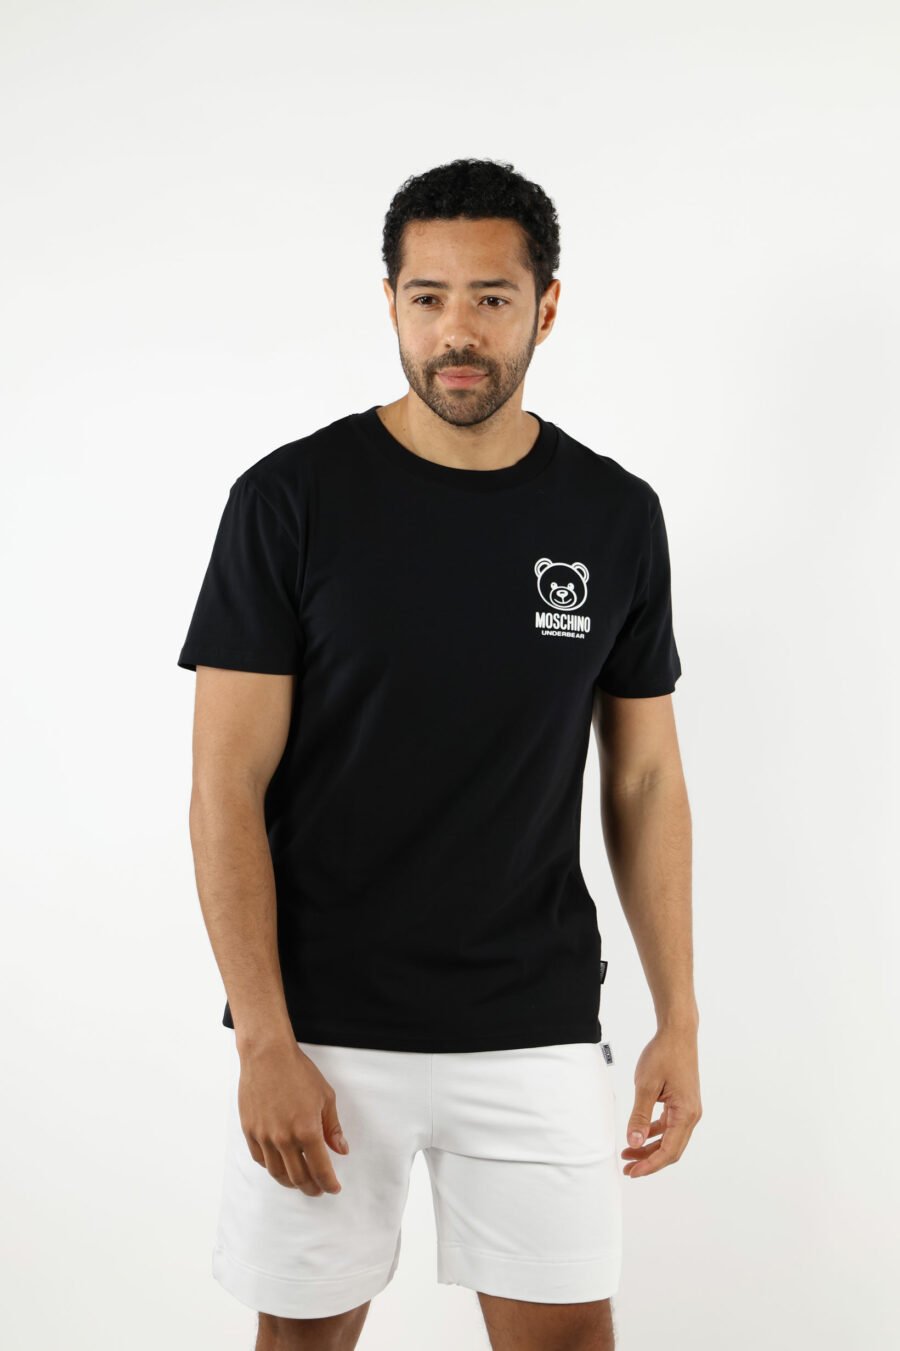 T-shirt preta com mini urso "underbear" em borracha branca - 111014